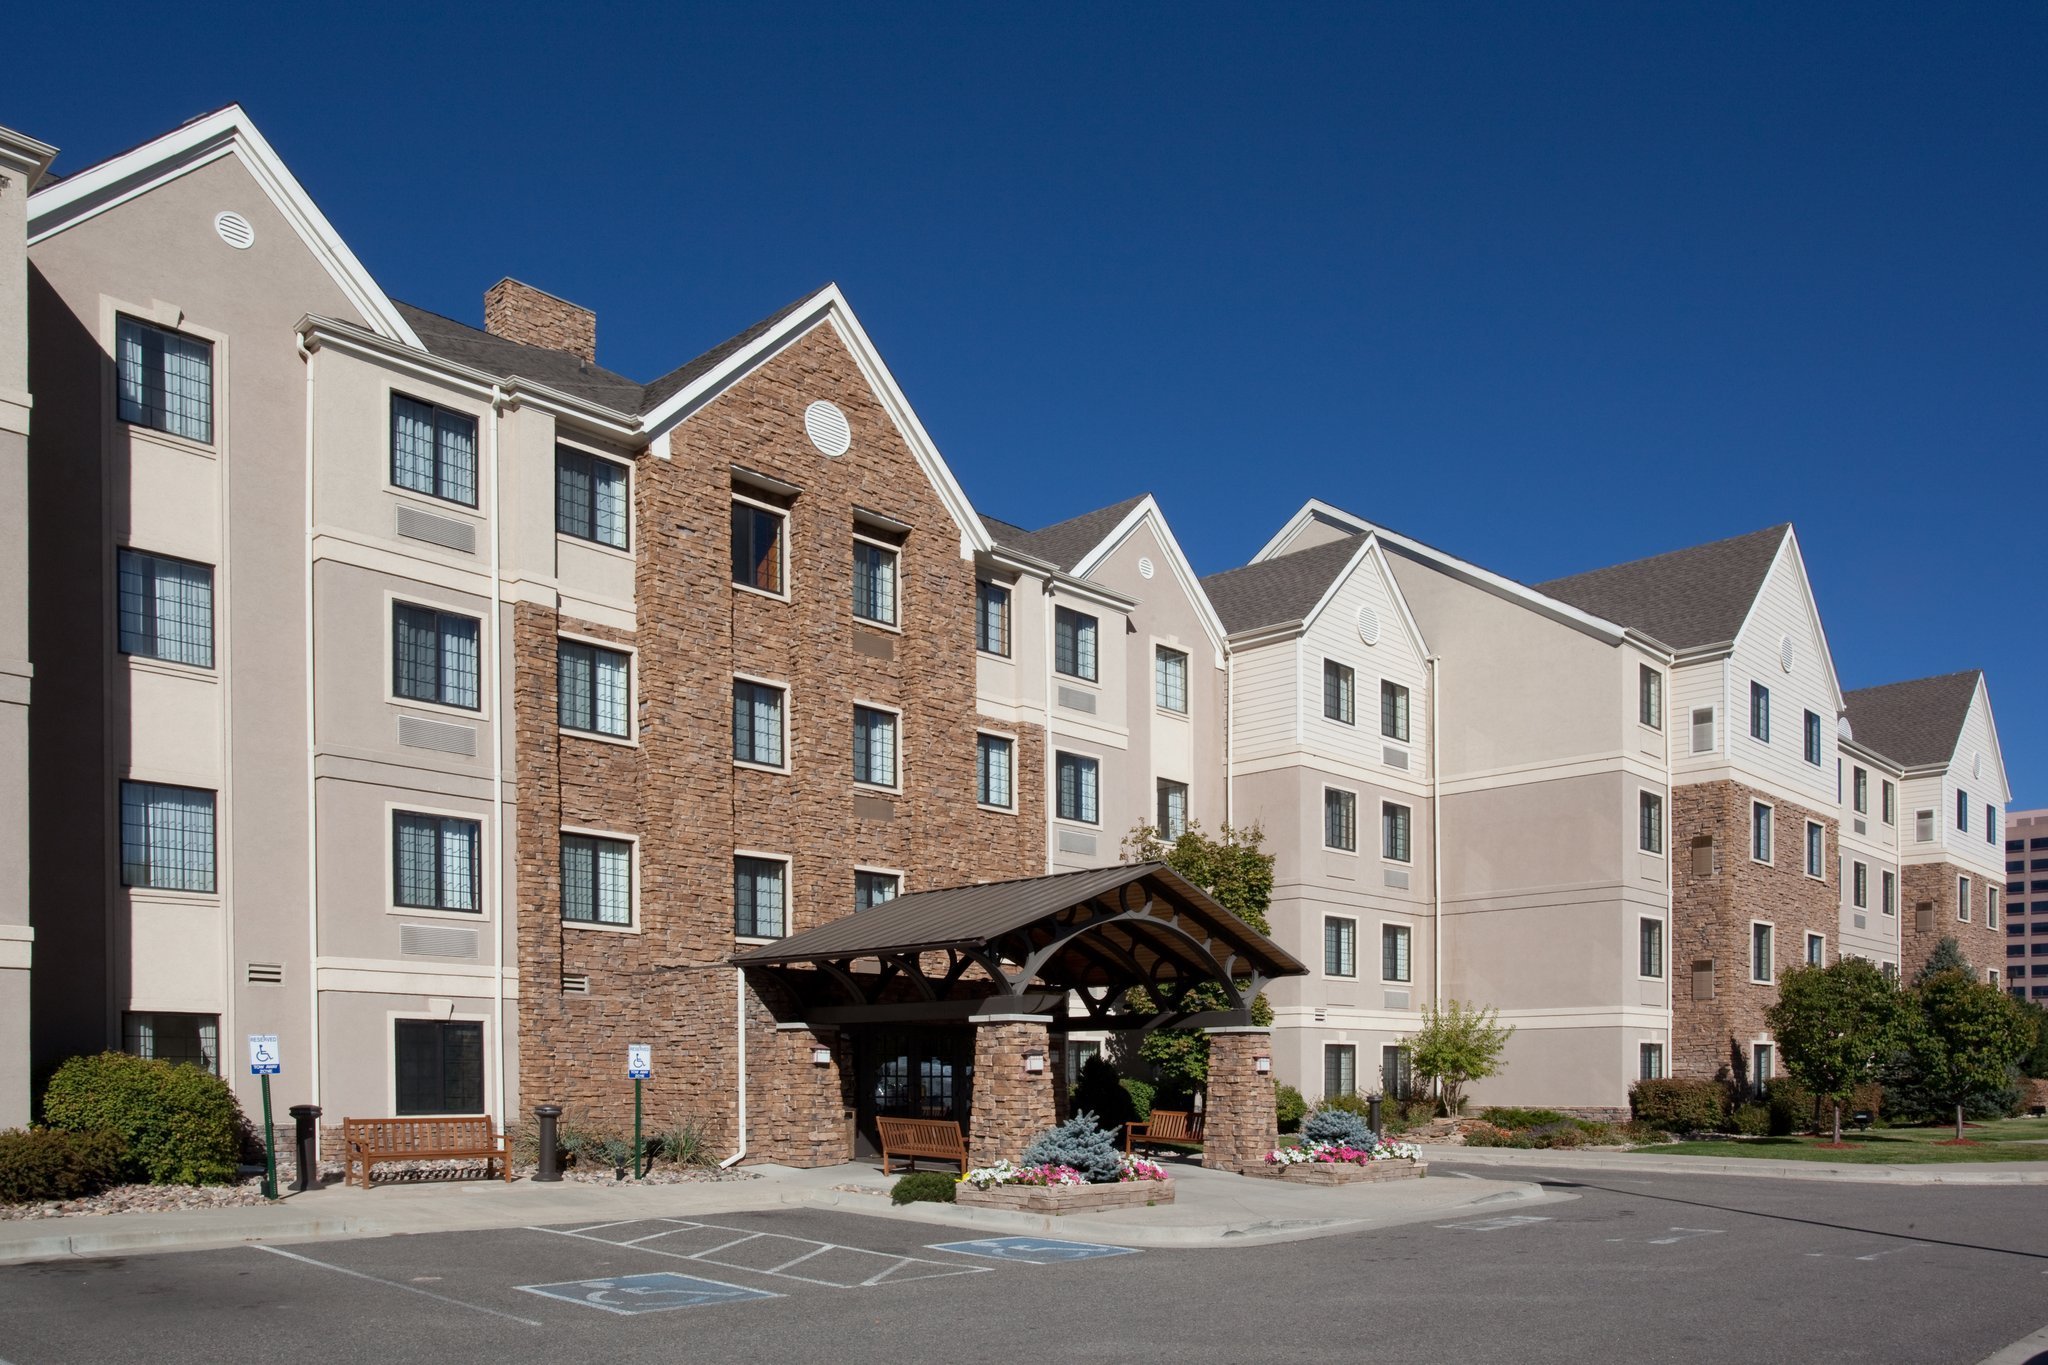 Photo of Staybridge Suites Denver Cherry Creek, Glendale, CO